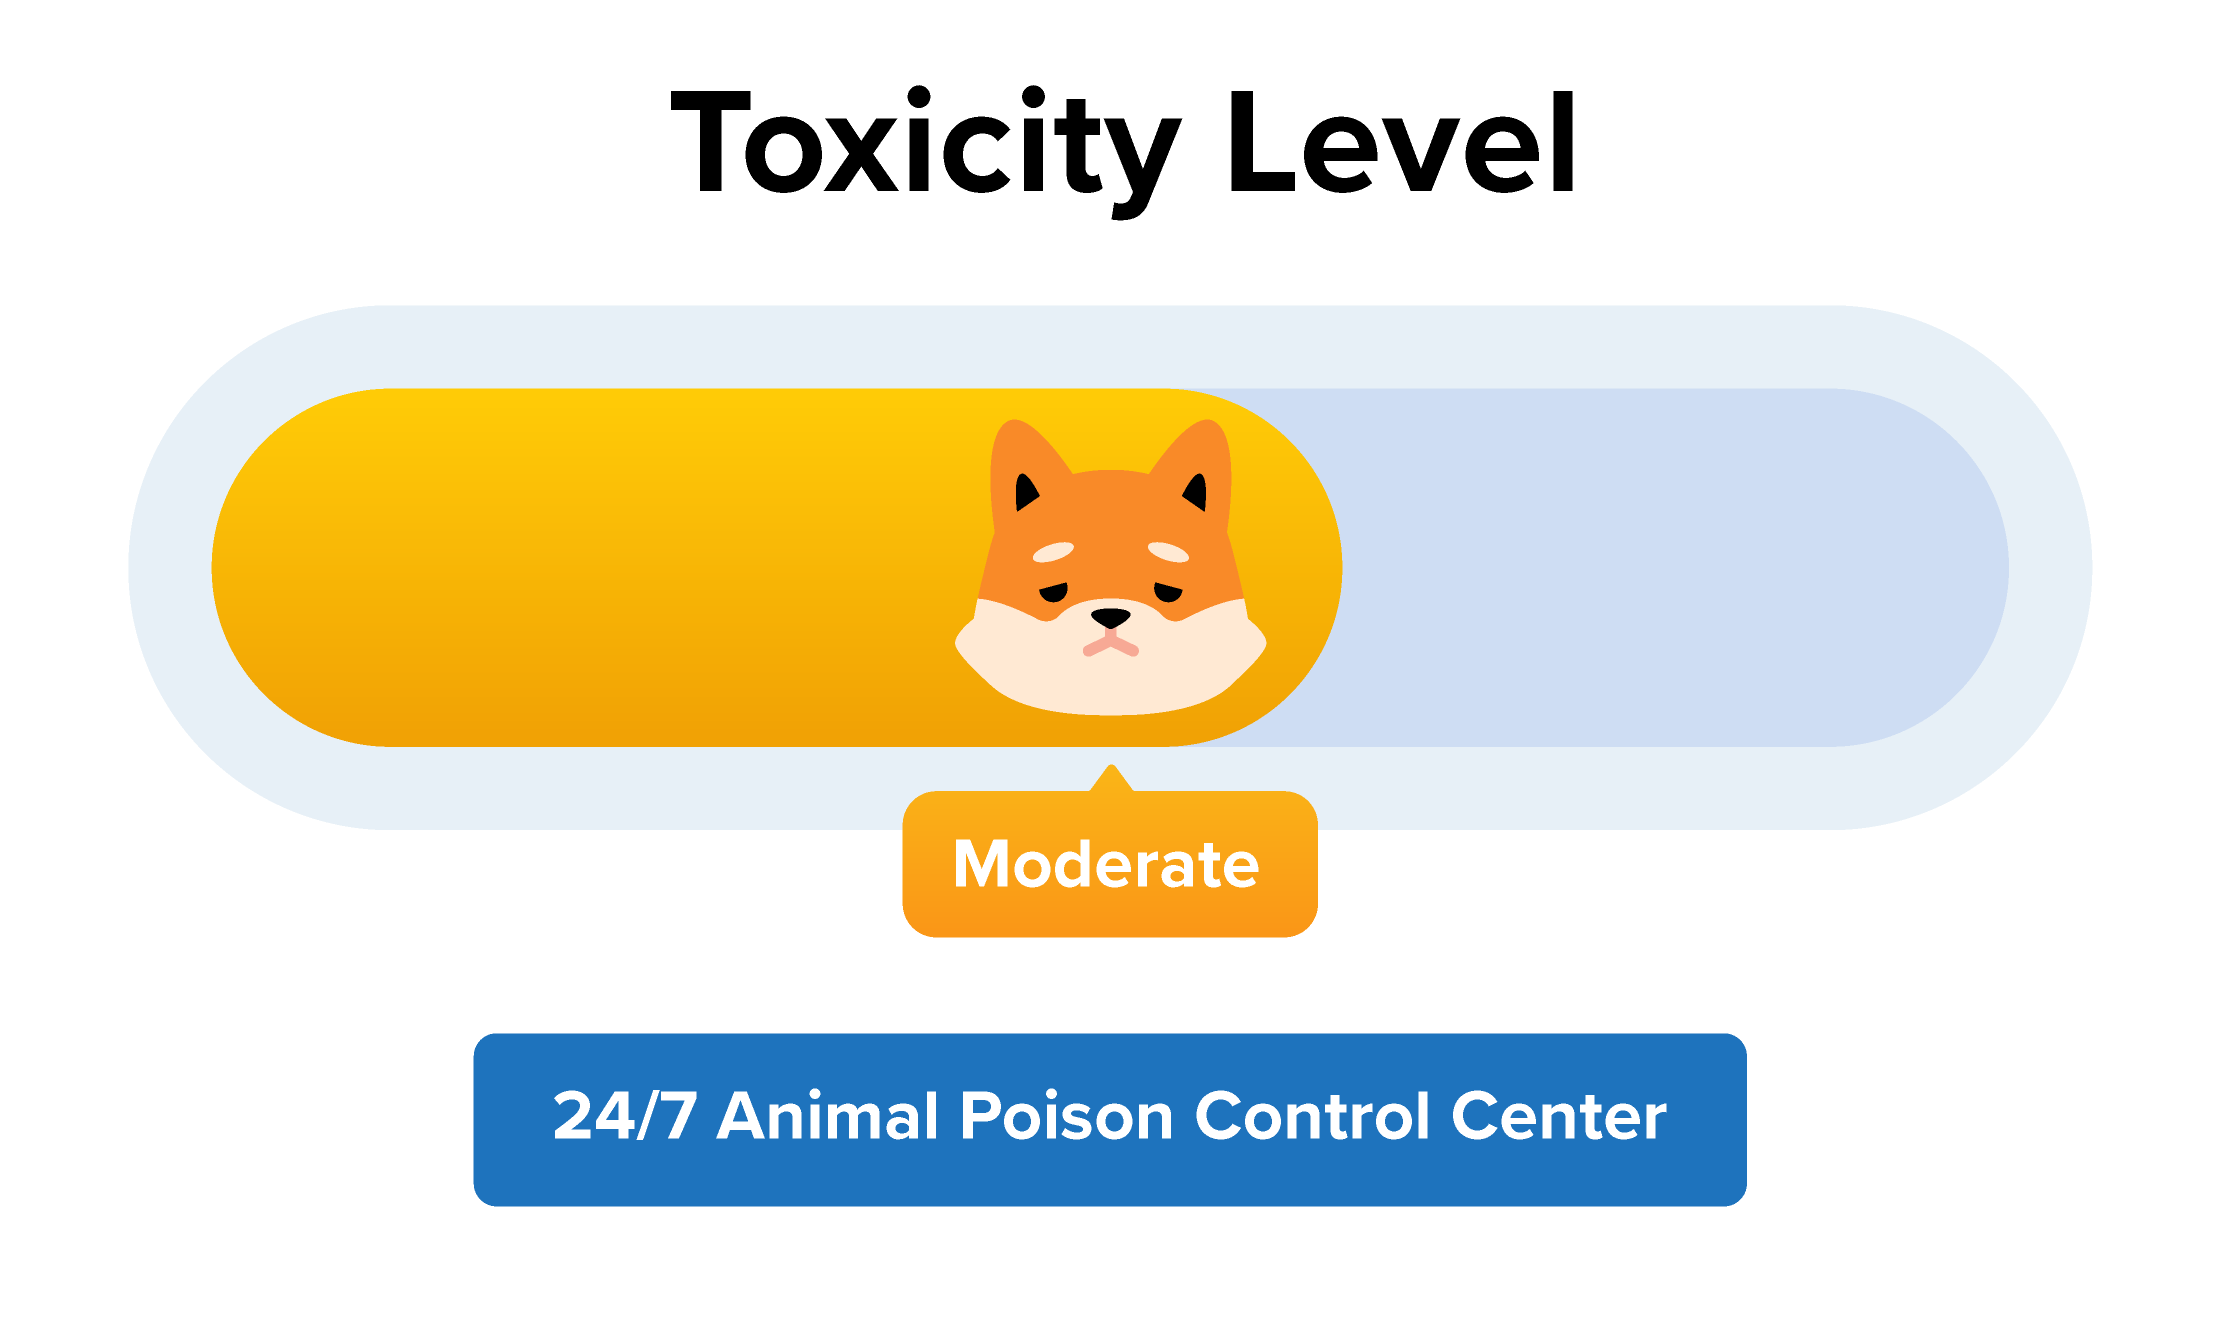 Dog Moderate Toxicity Level